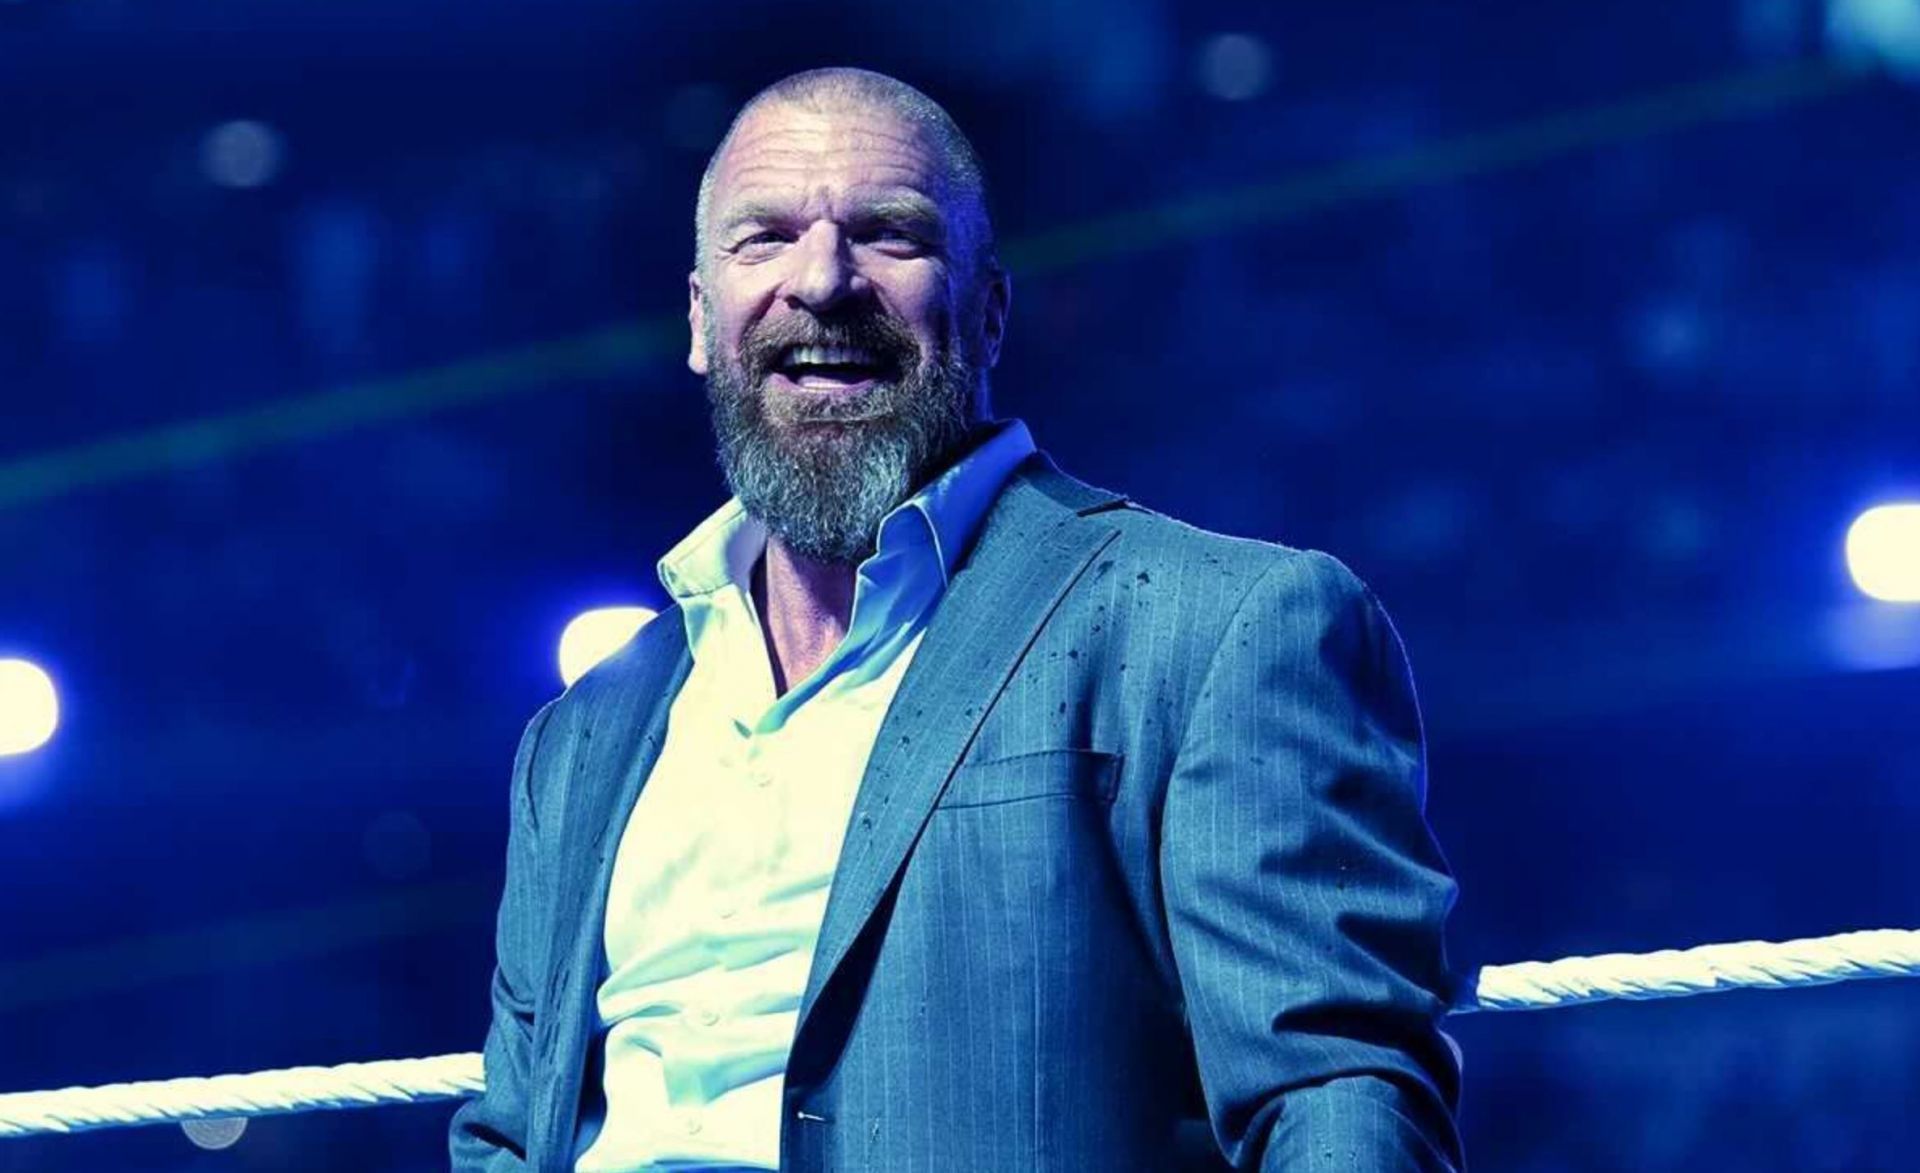 Triple H addressed the WWE Universe on Night 2 of WrestleMania